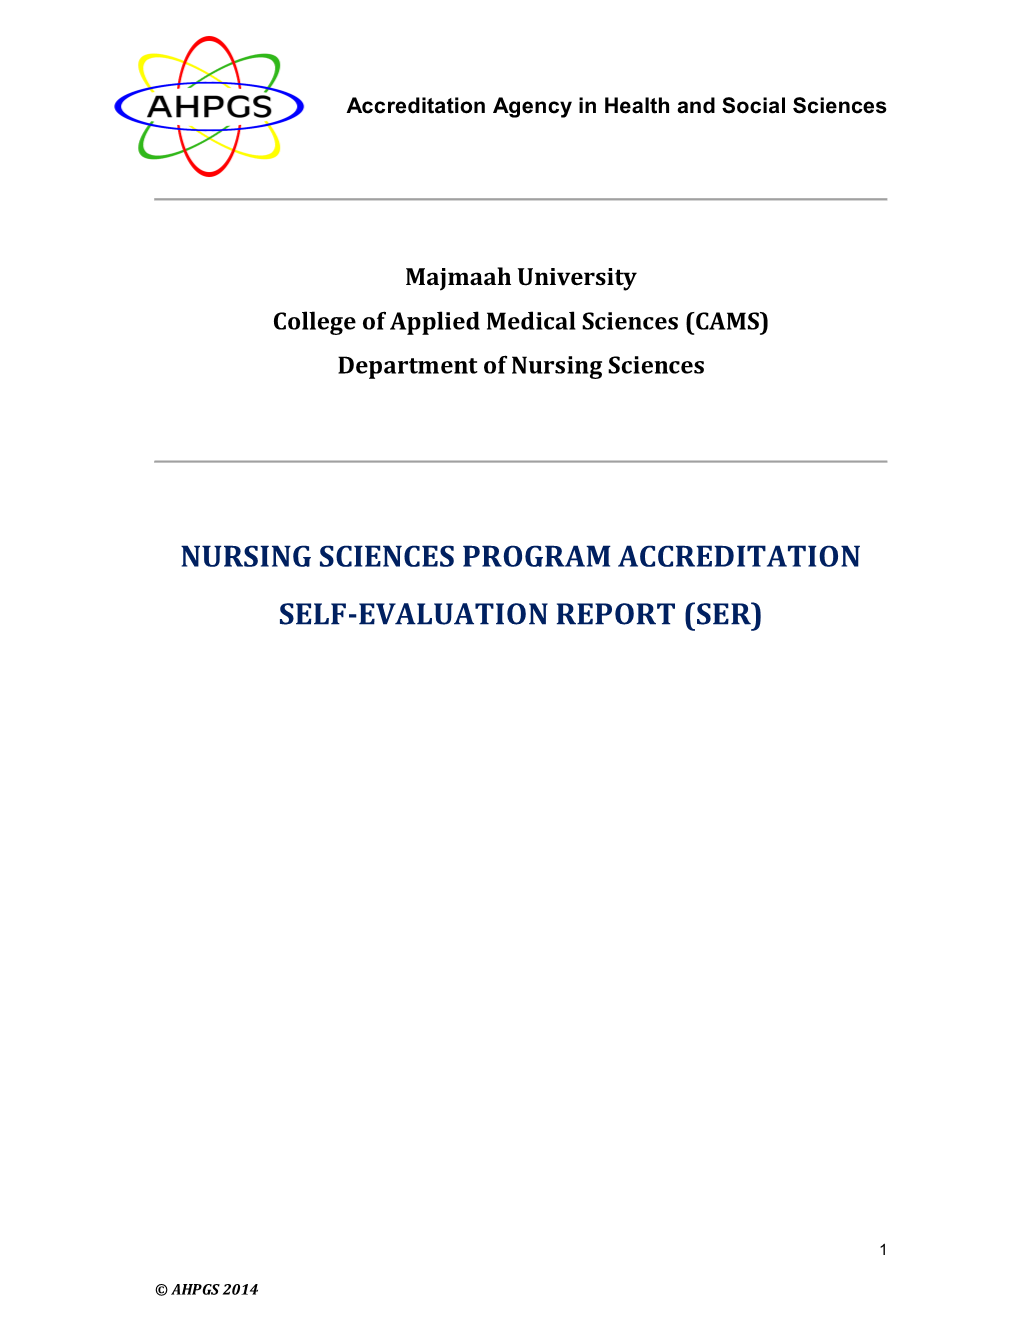 Nursing Sciences Program Accreditation Self